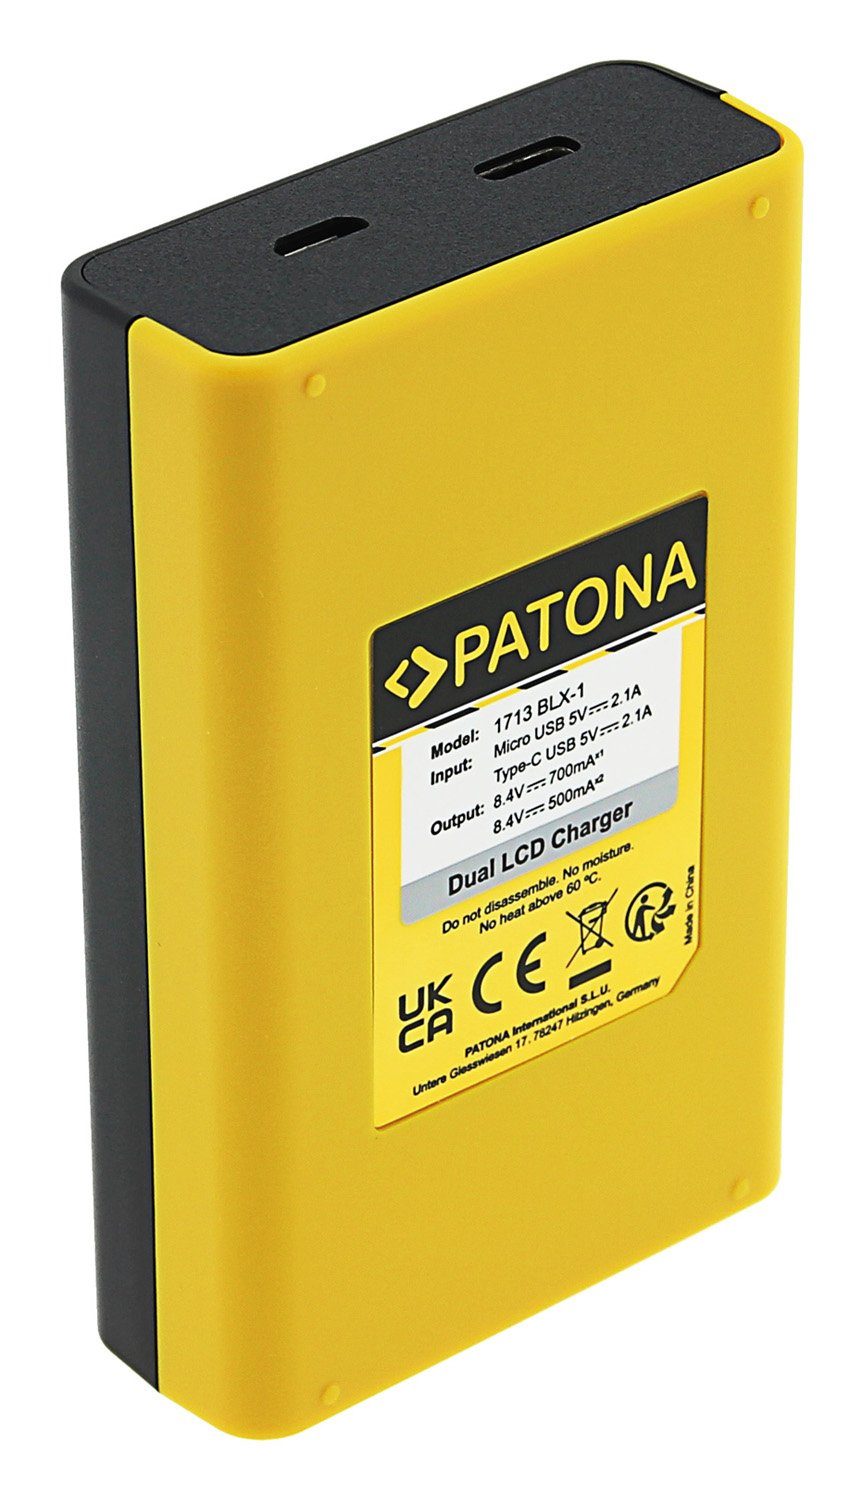 Set mAh, Anschluss Zubehör die Patona USB-C Kamera-Akku mit Olympus für 2250 3in1 Ladegerät BLX-1 OM-1 Dual